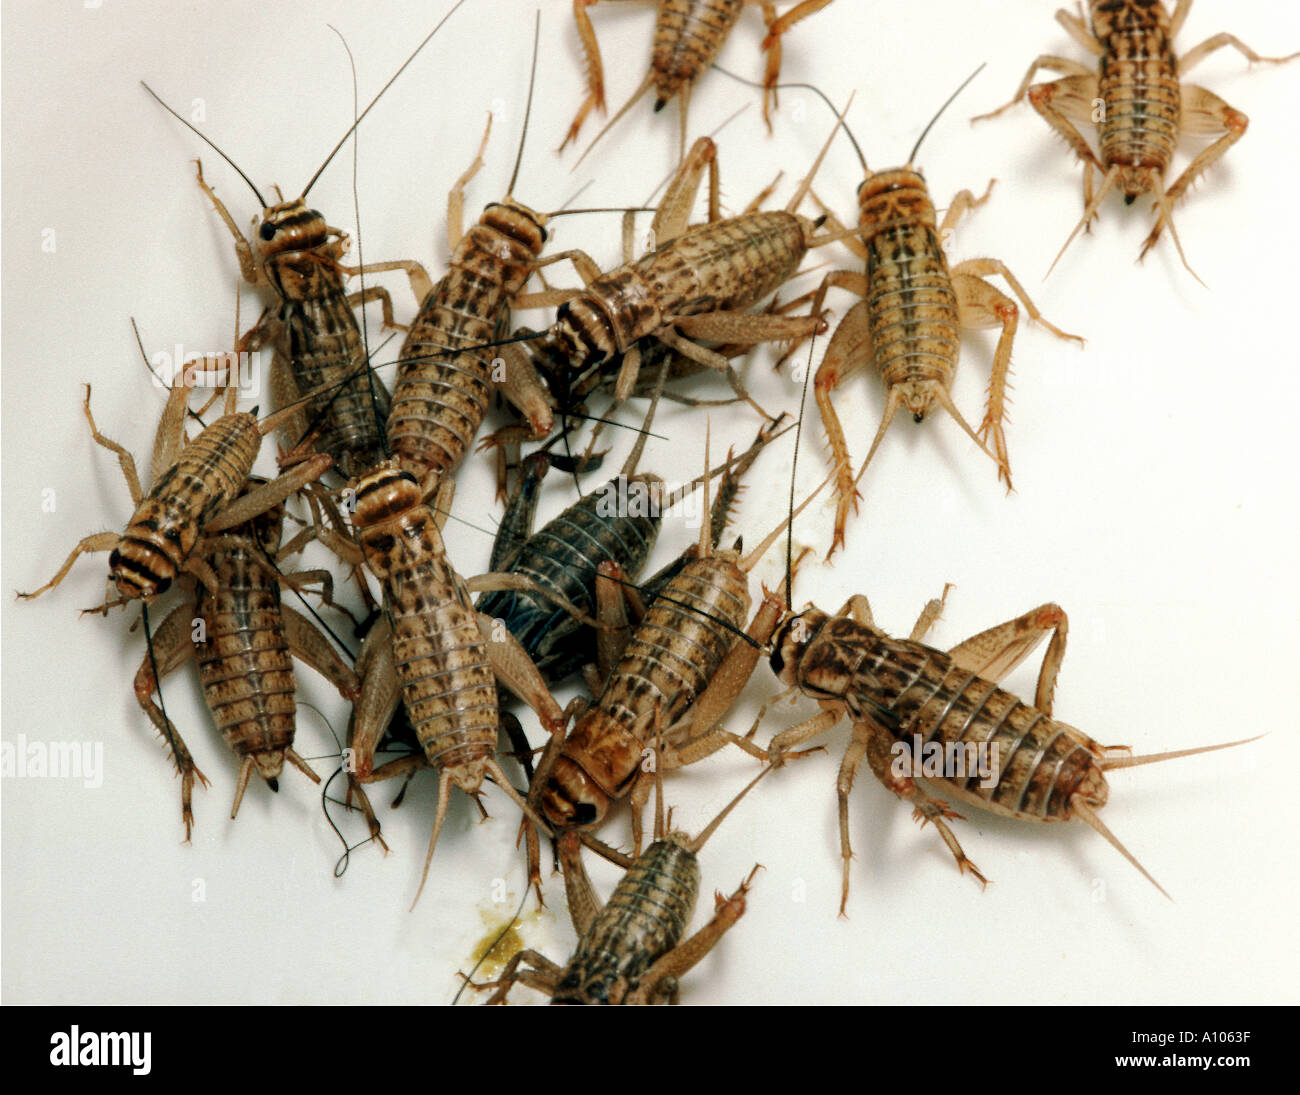 house cricket crickets Gryllidae Gryllinae Gryllus Heimchen Acheta domesticus Stock Photo